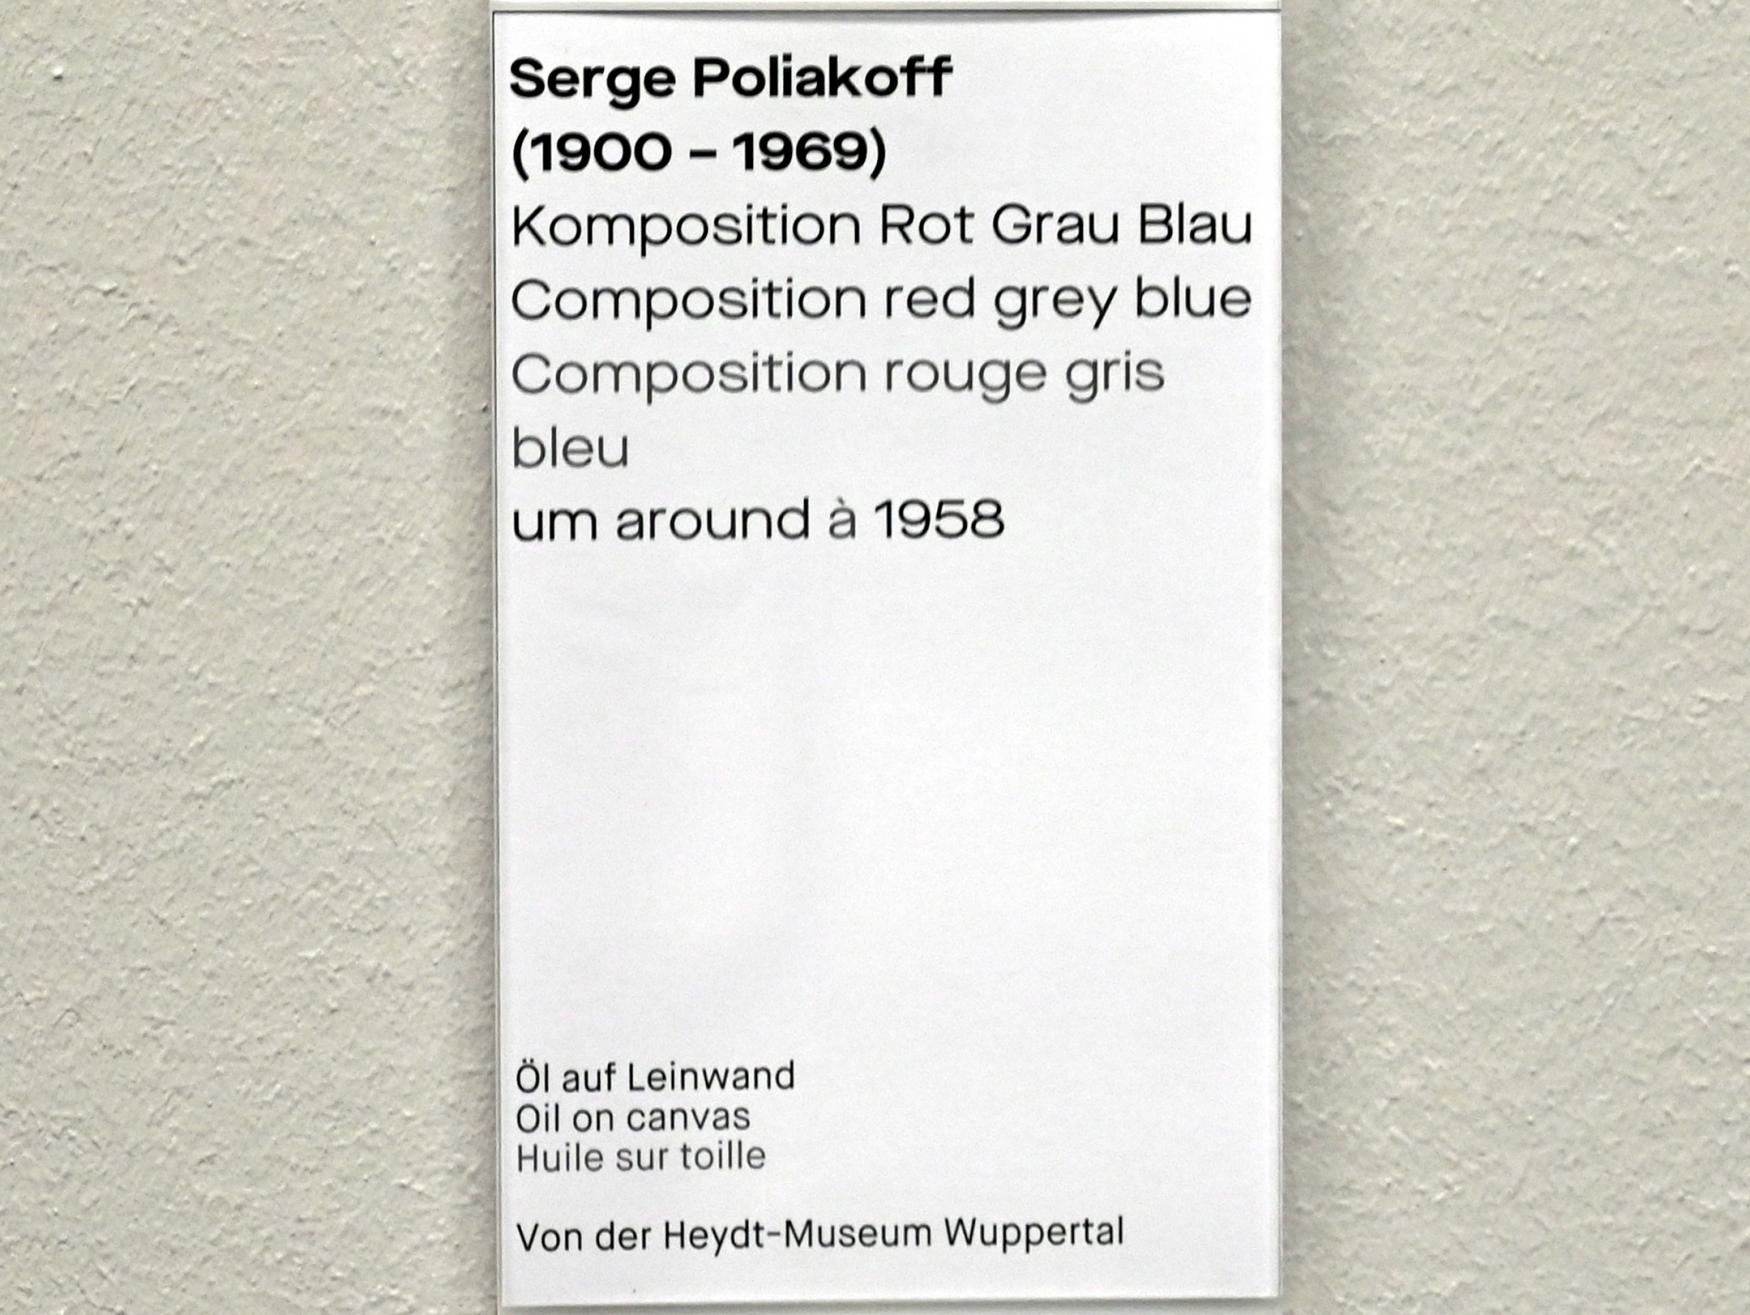 Serge Poliakoff (1936–1968), Komposition Rot Grau Blau, Chemnitz, Museum Gunzenhauser, Saal 2.6 - Serge Poliakoff, um 1958, Bild 2/2